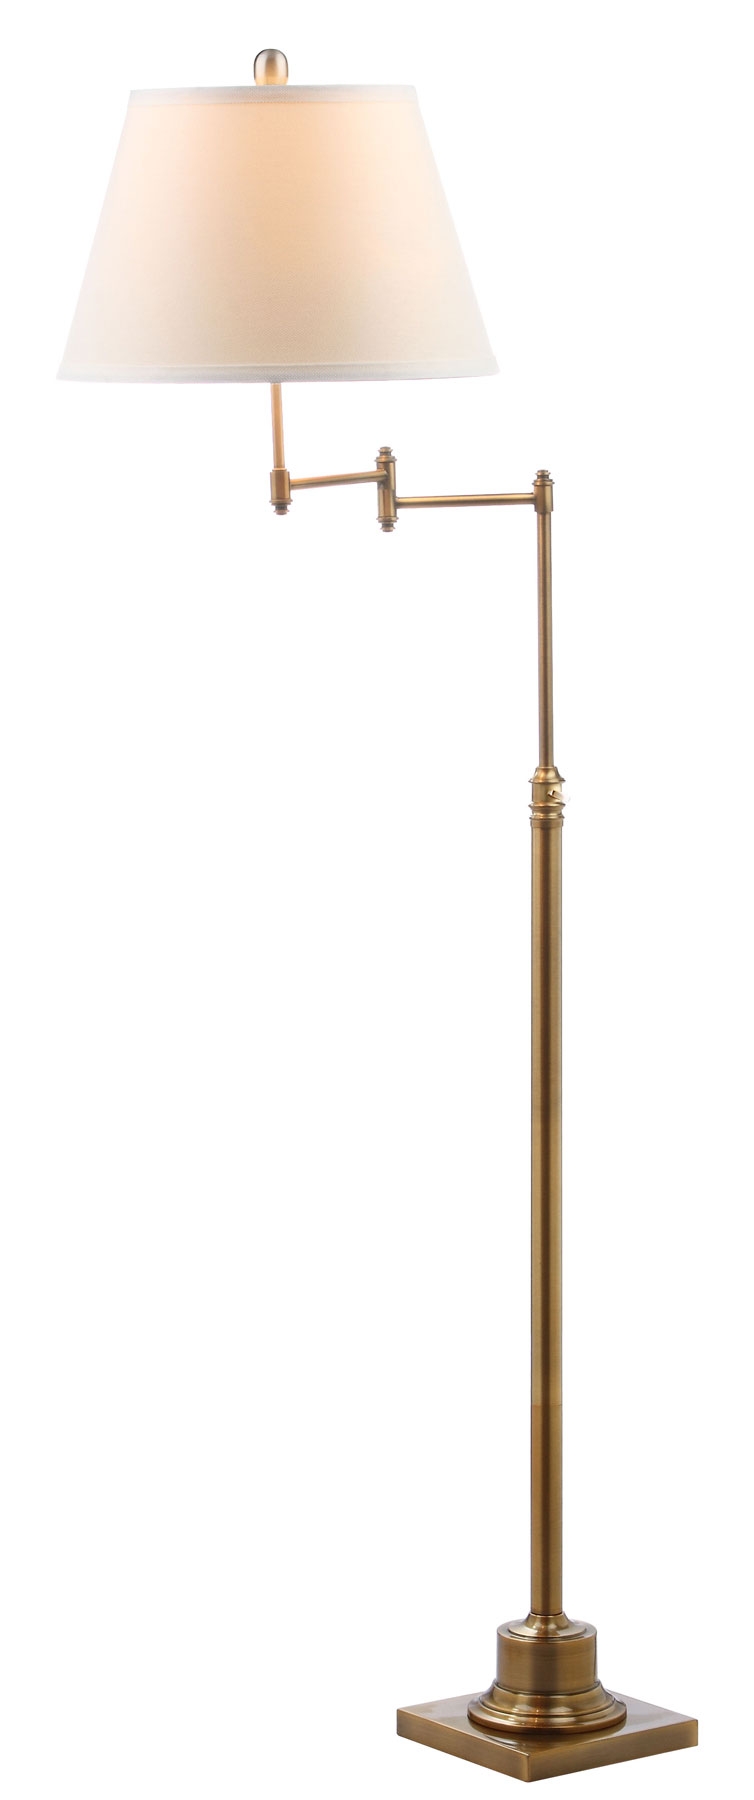 Ingram 68.5 -Inch H Adjustable Swivel Floor Lamp - Gold - Arlo Home - Image 1